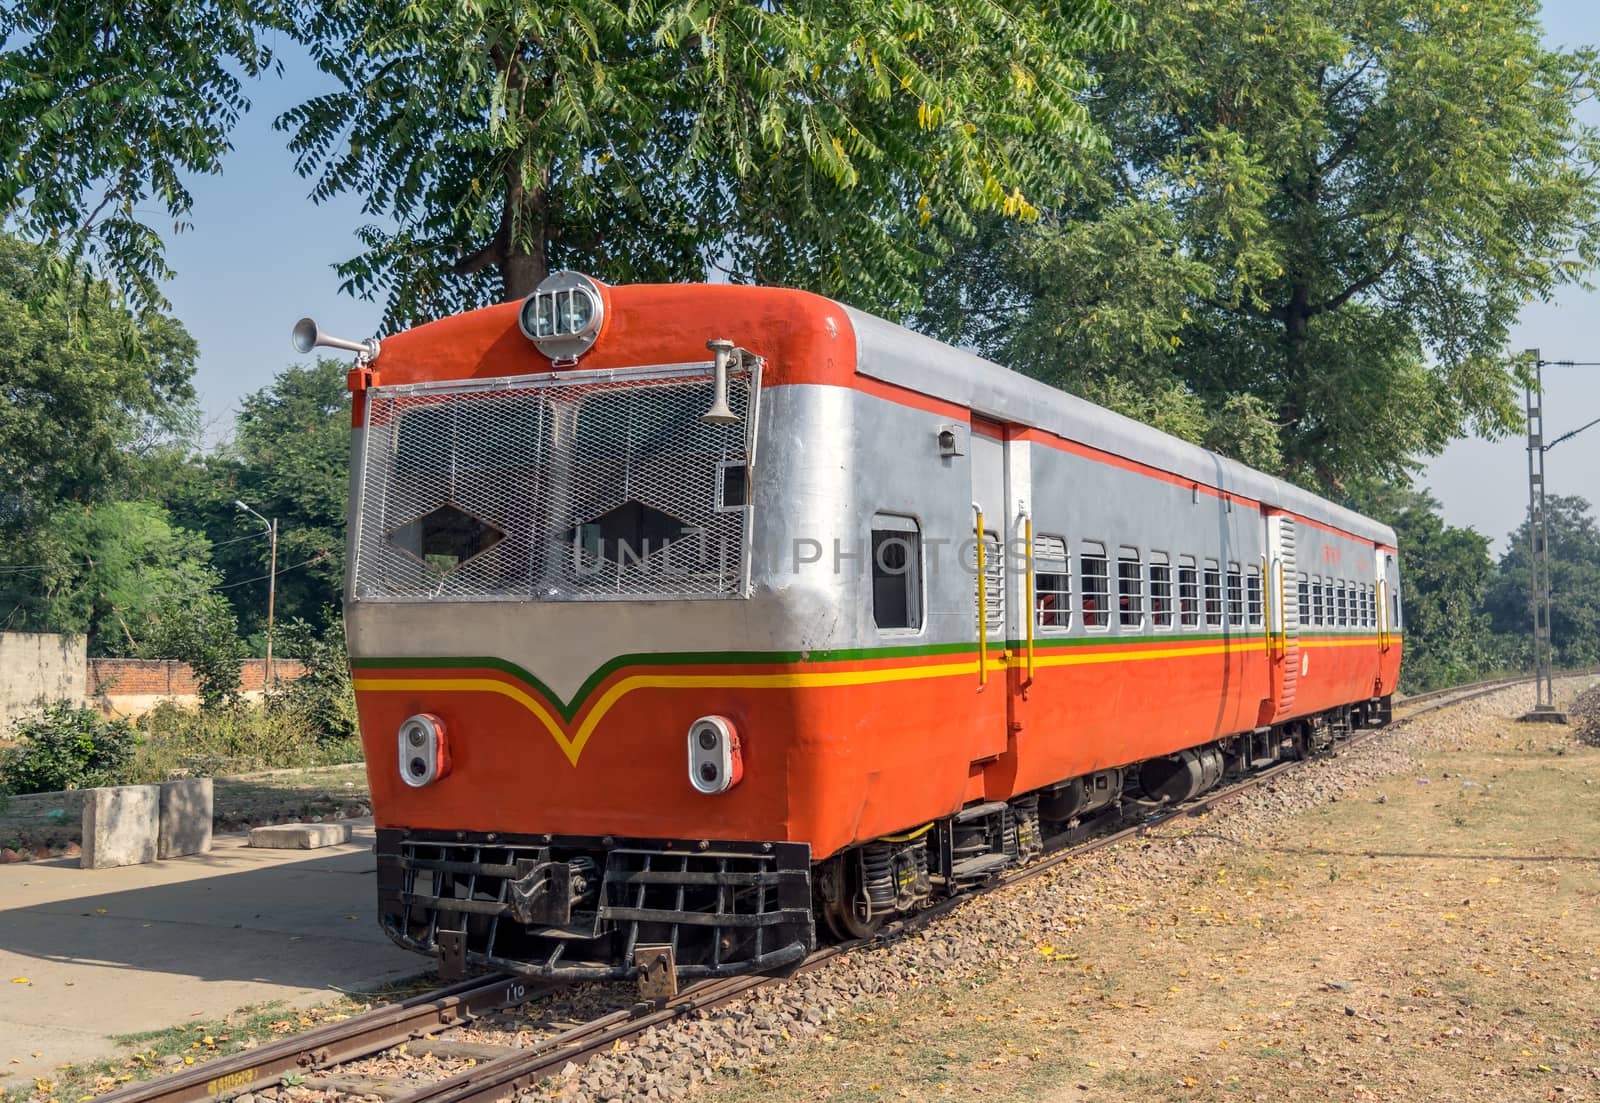 Indian Railway's rail bus or rail motor operating between Mathura and Vrindavan, Uttar Pradesh, India. by lalam